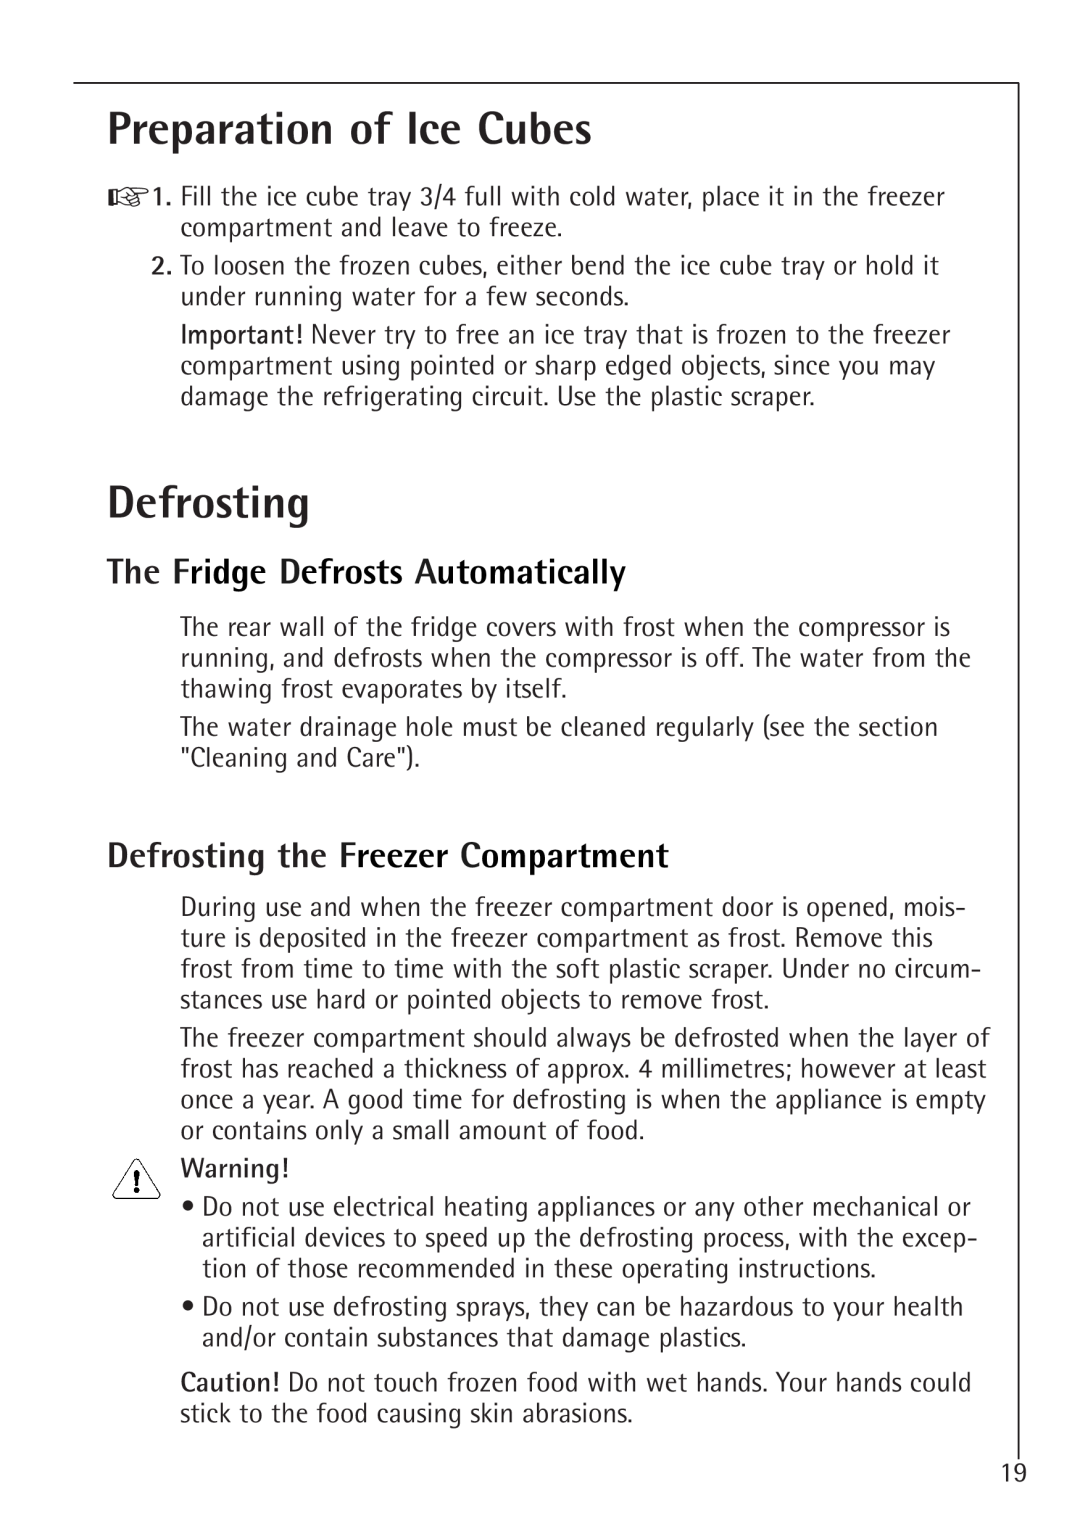 Electrolux K 91240-4 i, K 98840-4 i manual Preparation of Ice Cubes, Defrosting, The Fridge Defrosts Automatically 